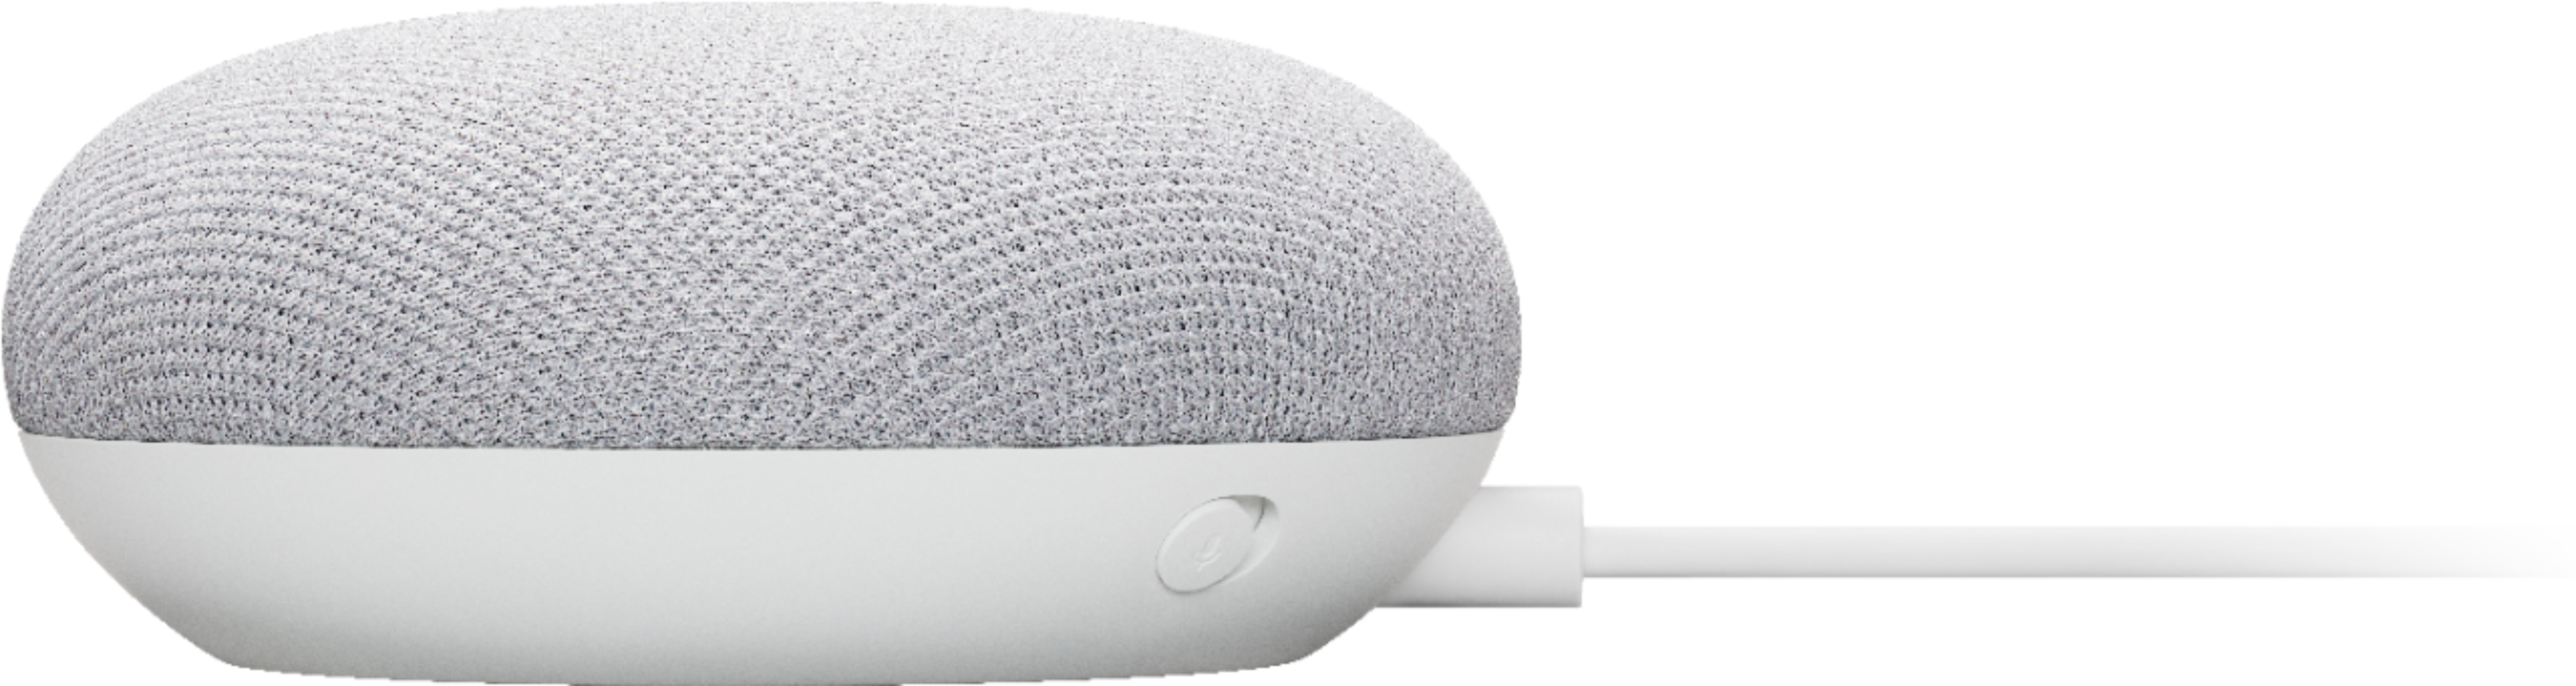 Google Nest Mini Chalk for sale online 2nd Generation Smart Speaker 